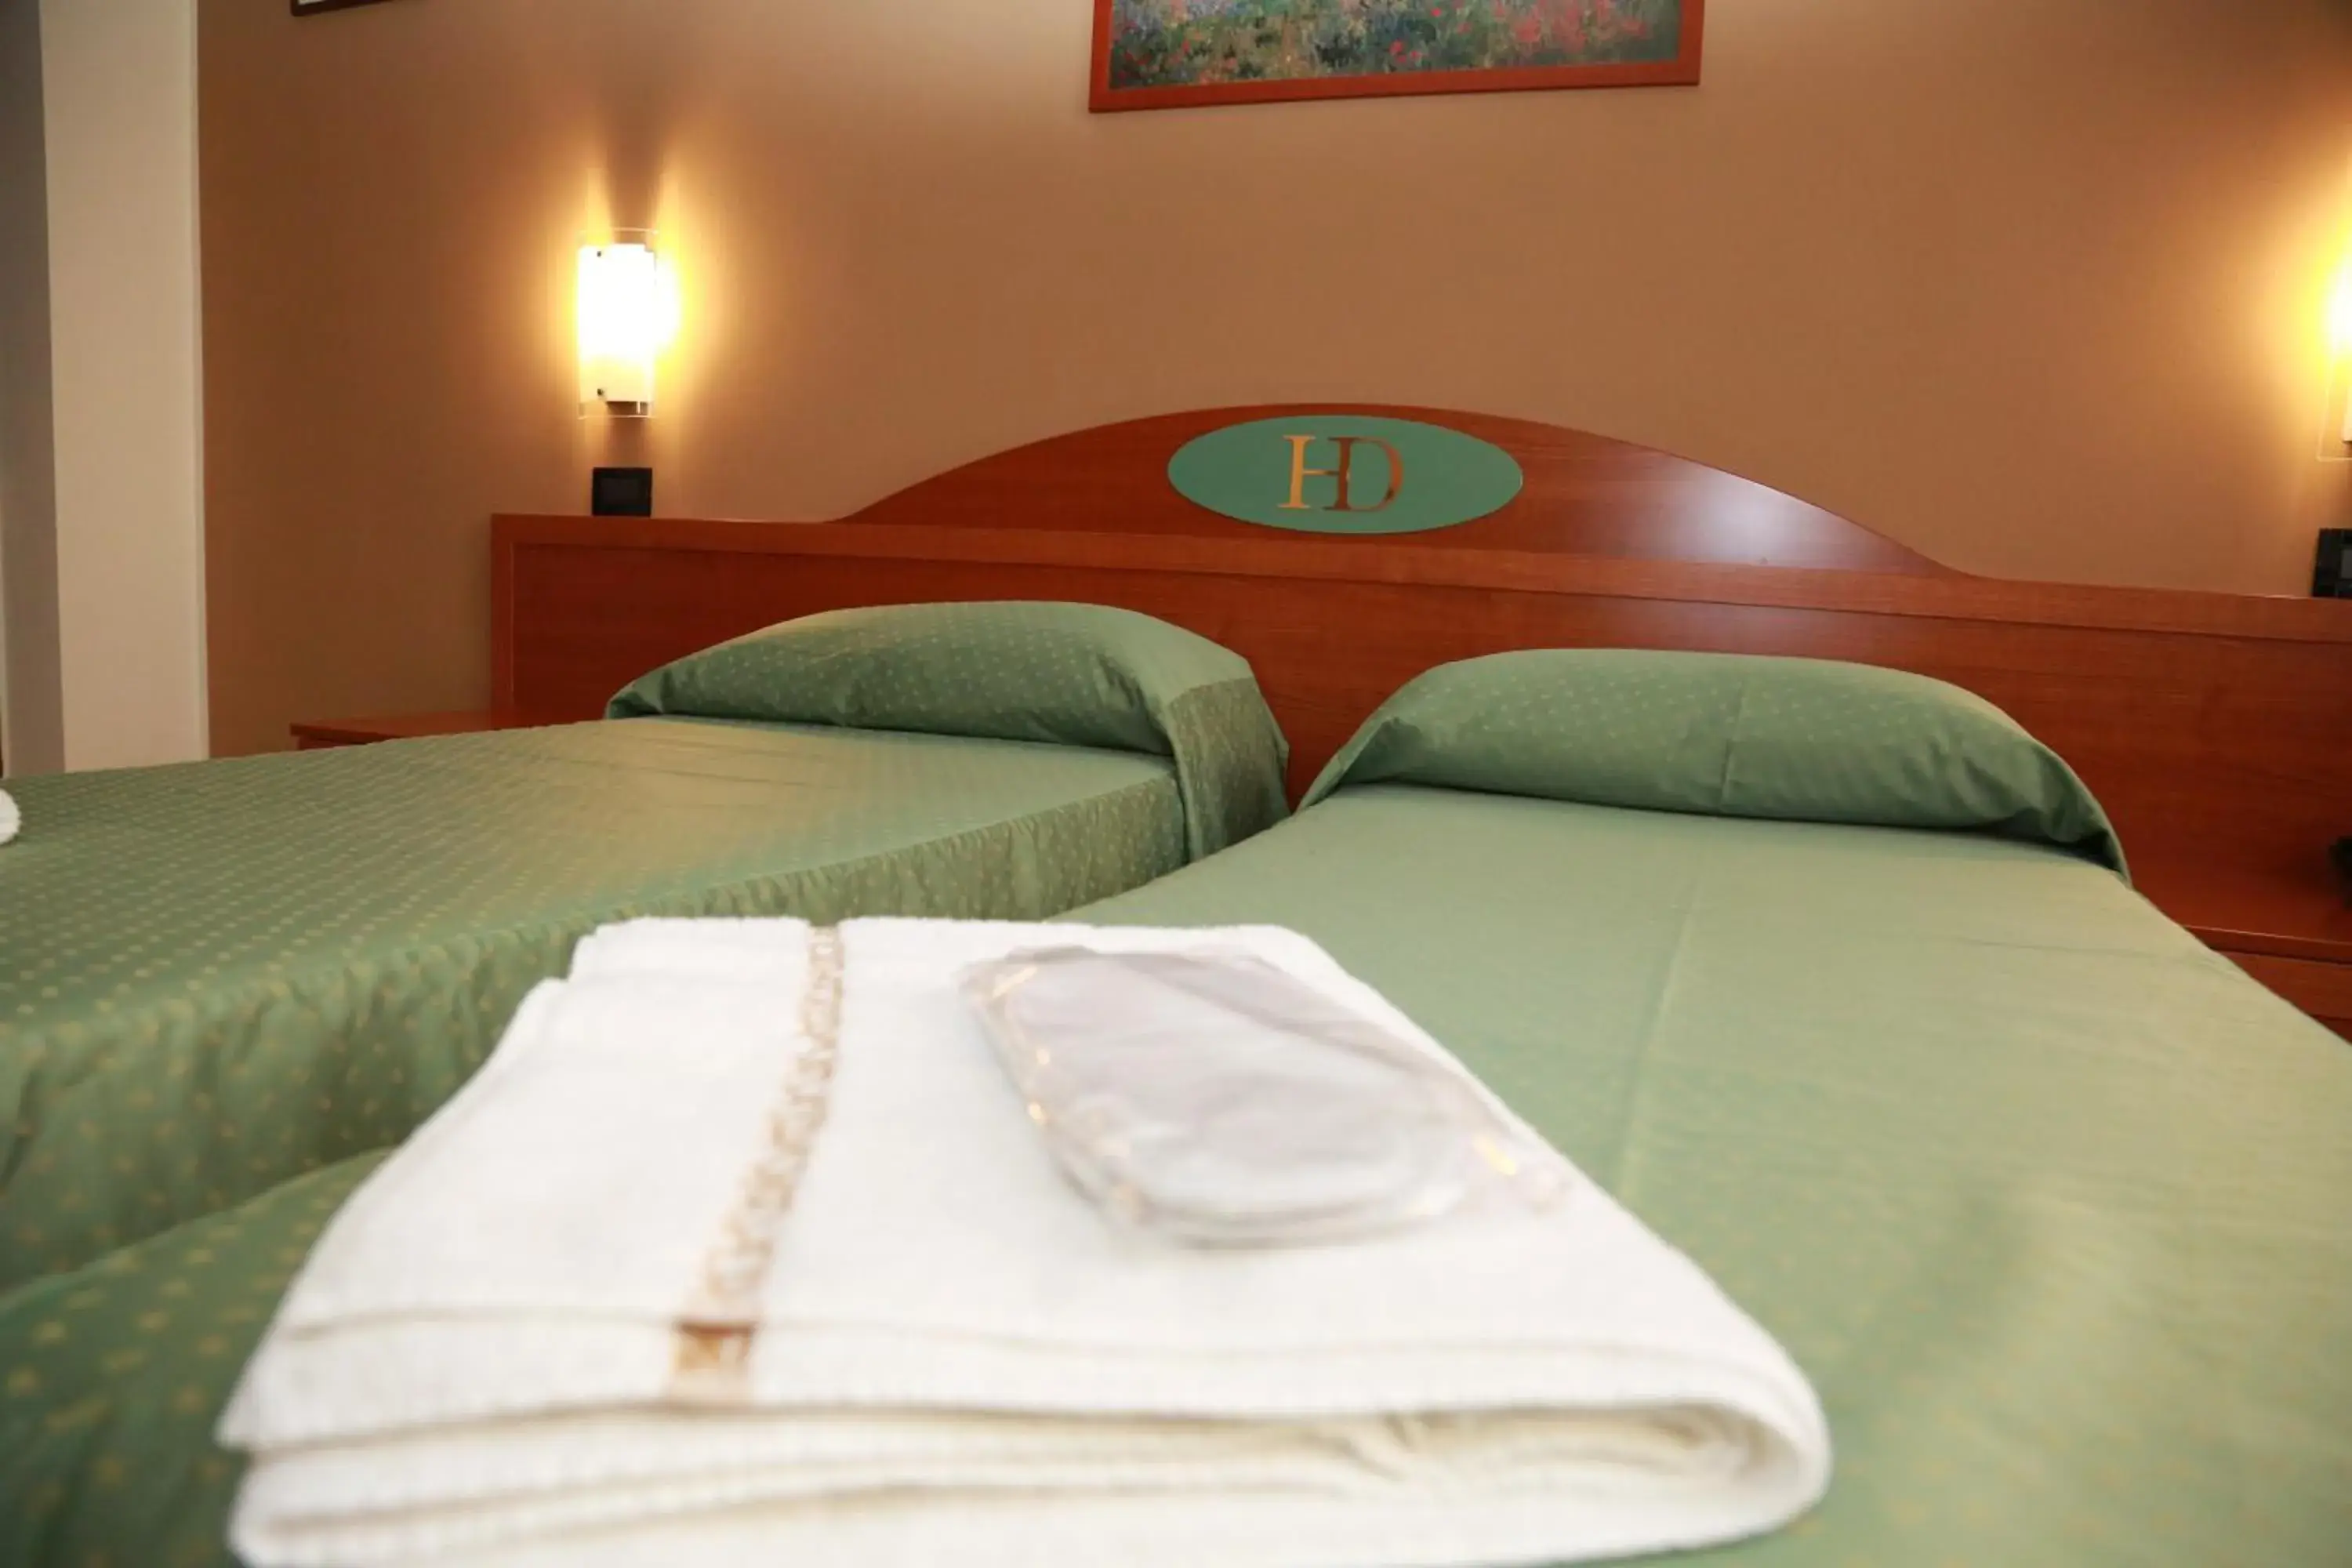 Bed, Room Photo in Hotel Dor